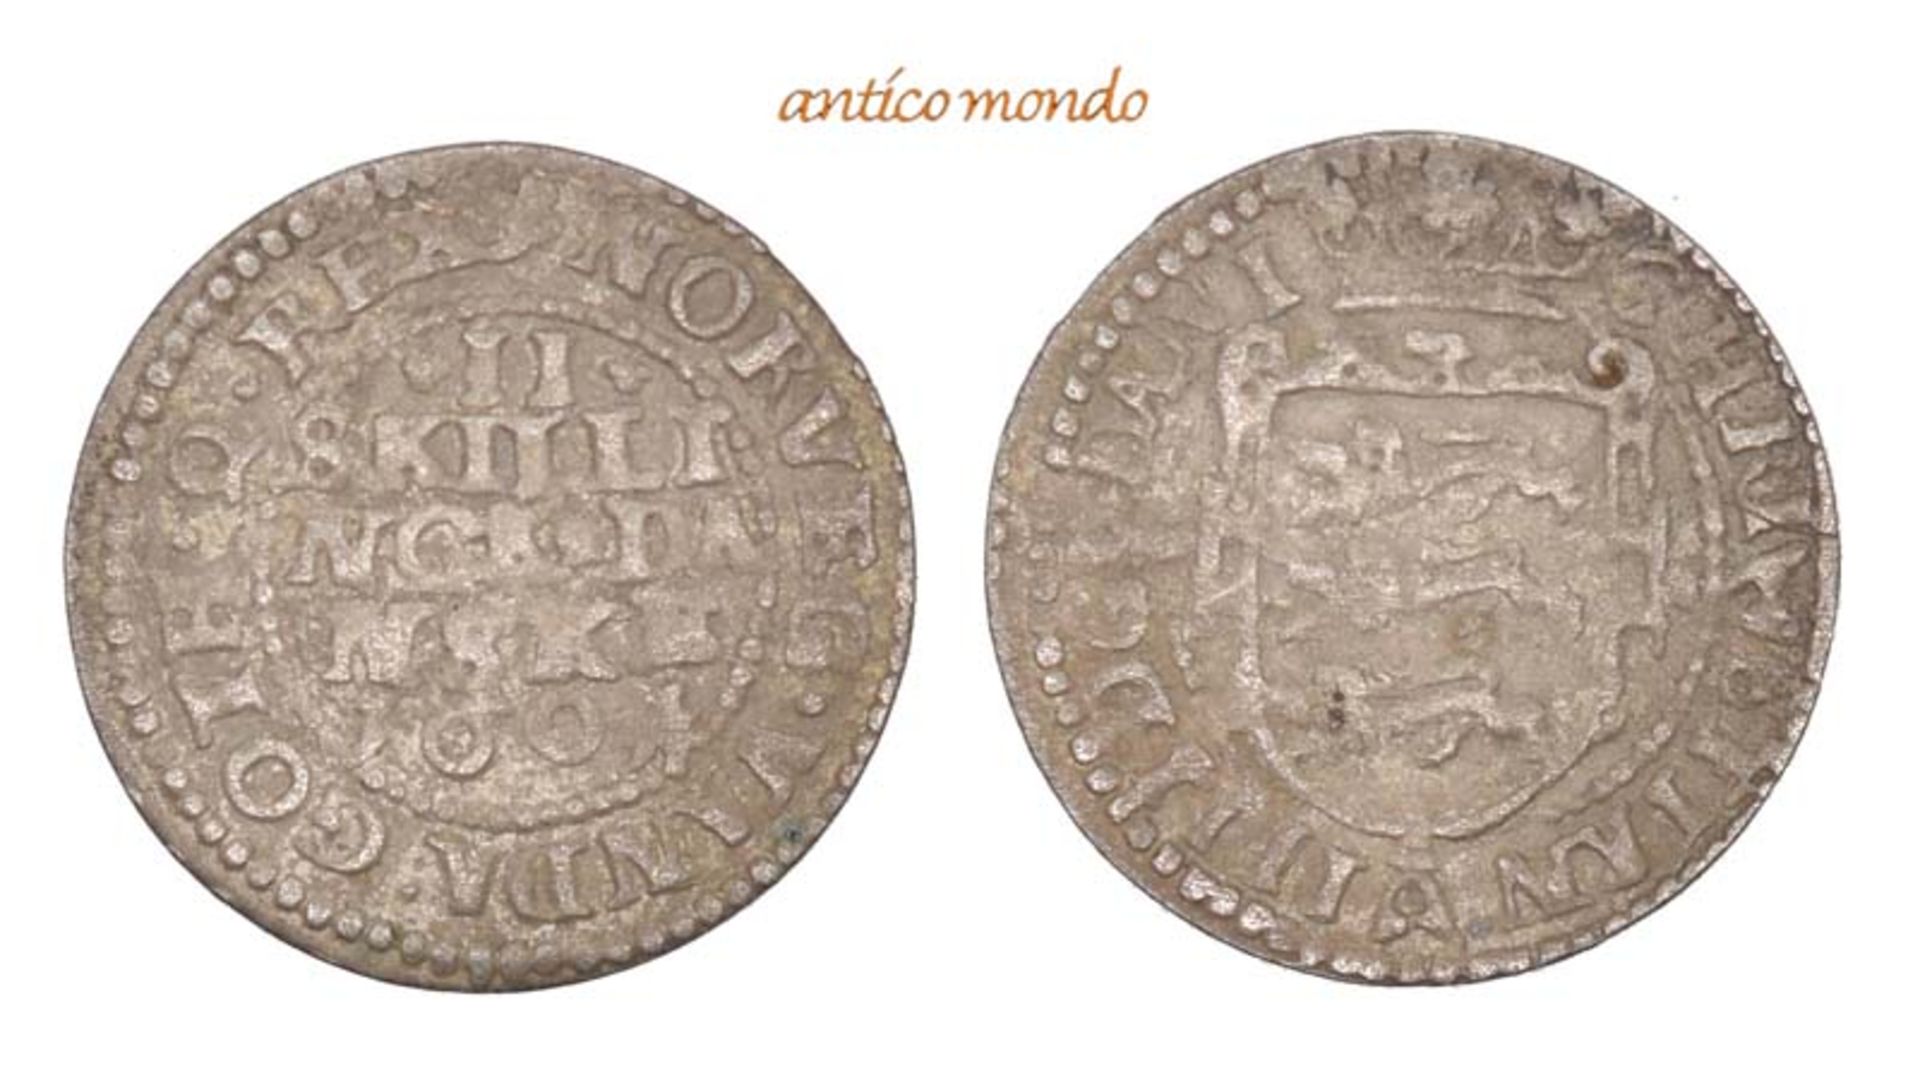 Dänemark, Christian IV., 1588-1648, 2 Skilling, 1604, sehr schön, 1,68 g- - -21.50 % buyer's premium